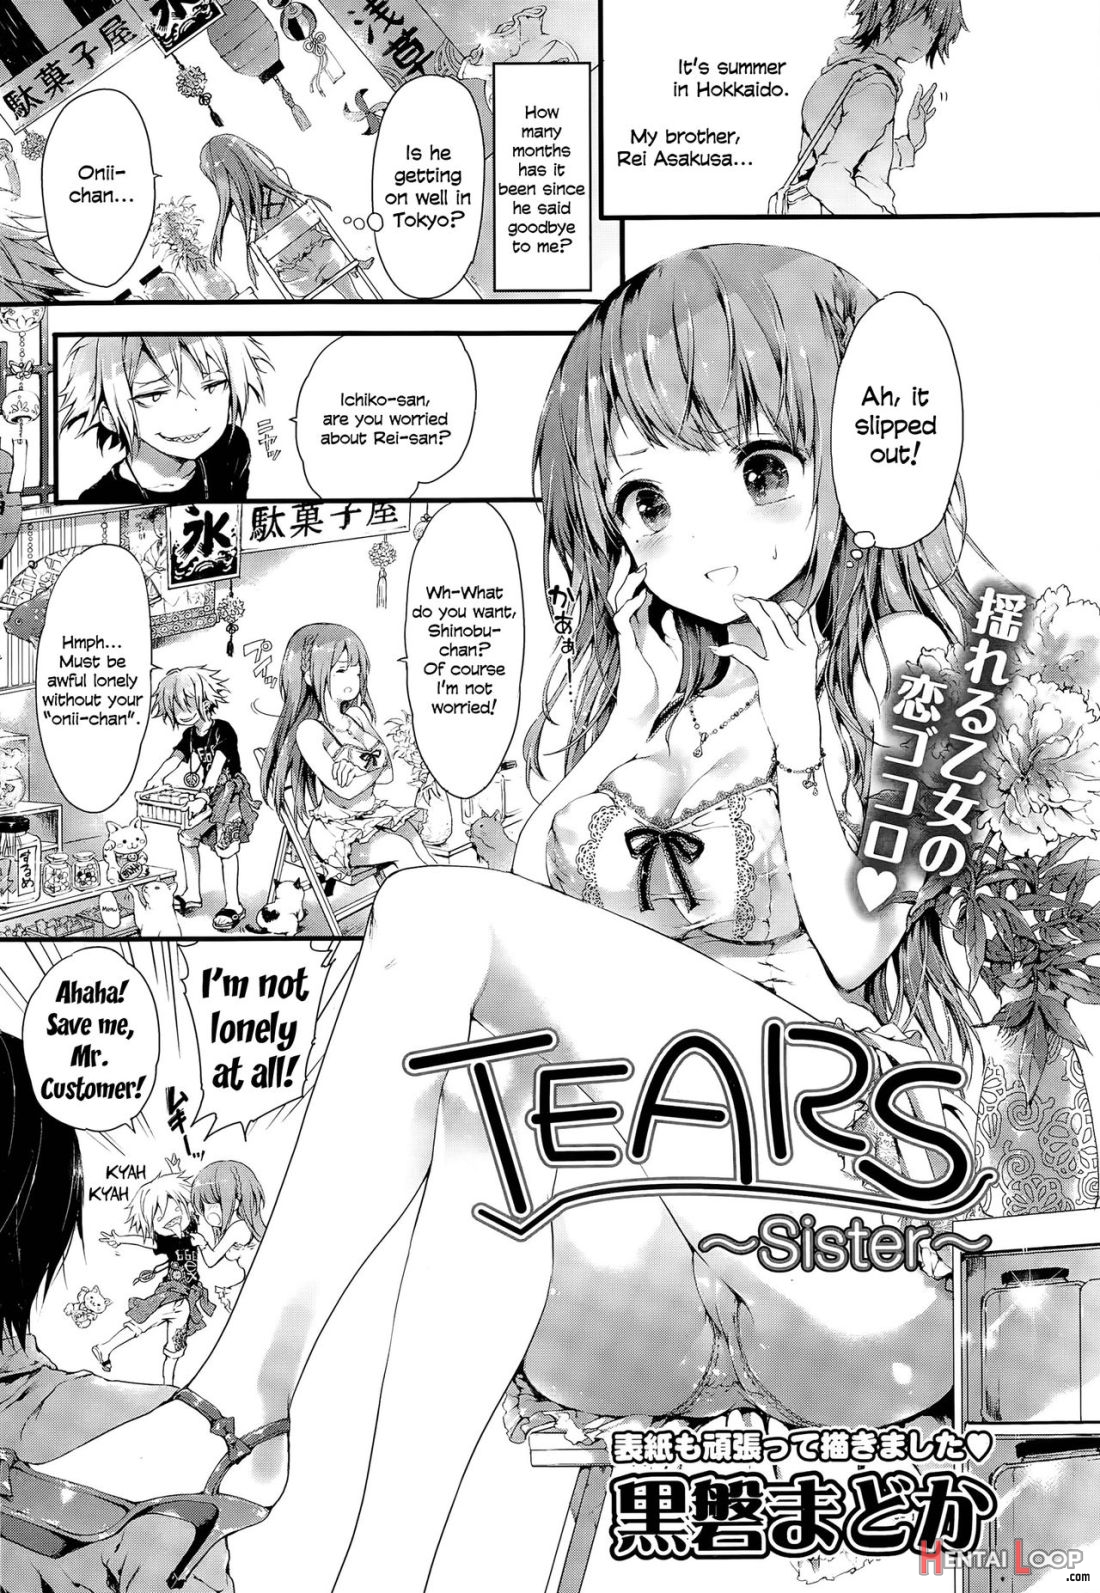 Tears ~sister~ page 1